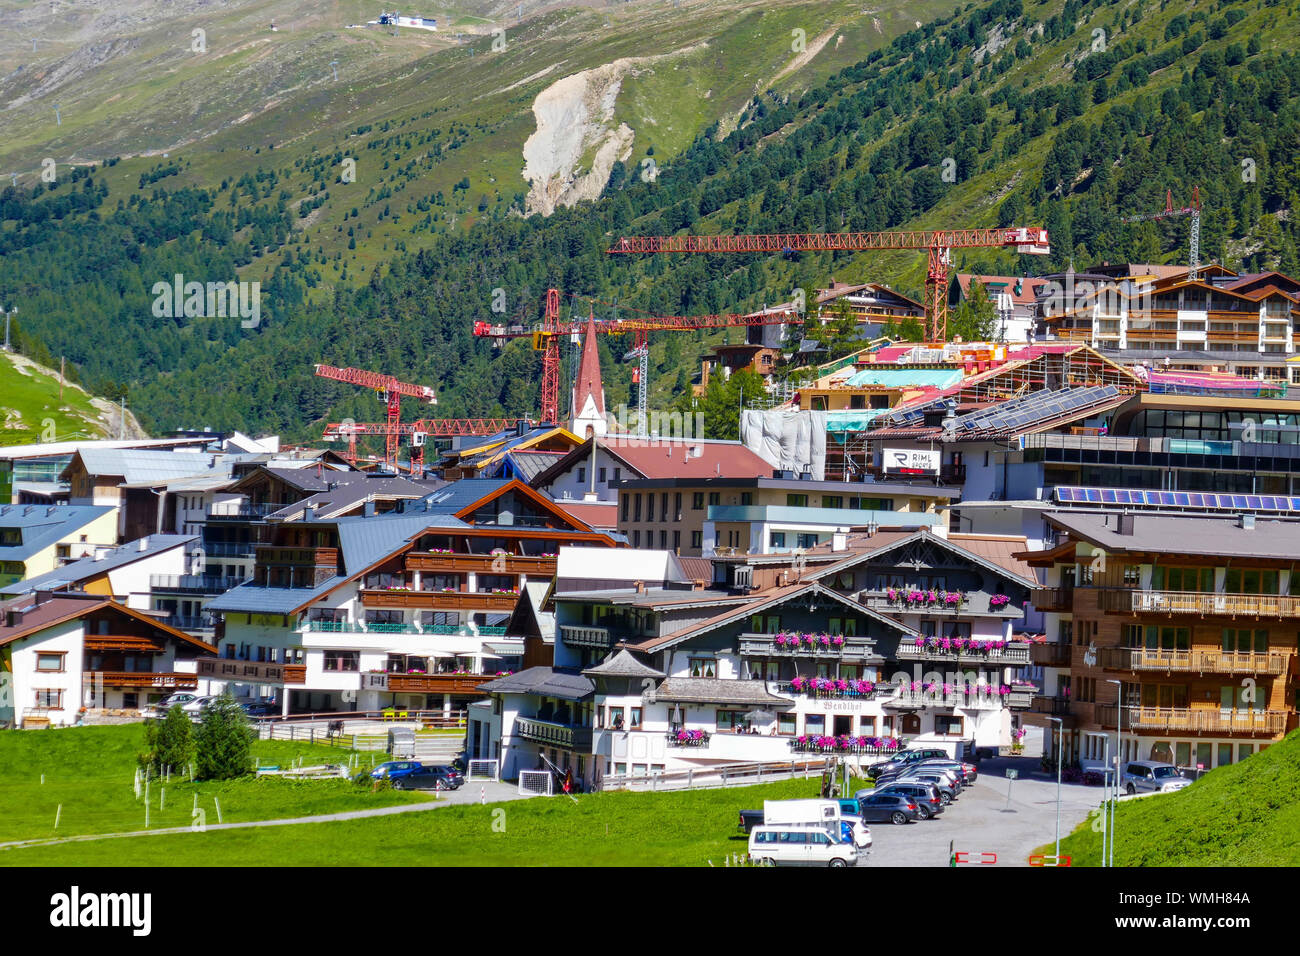 Gru e lavori di costruzione nelle montagne verdi e blu giornata di sole a Obergurgl, Ötztal, Austria, Foto Stock